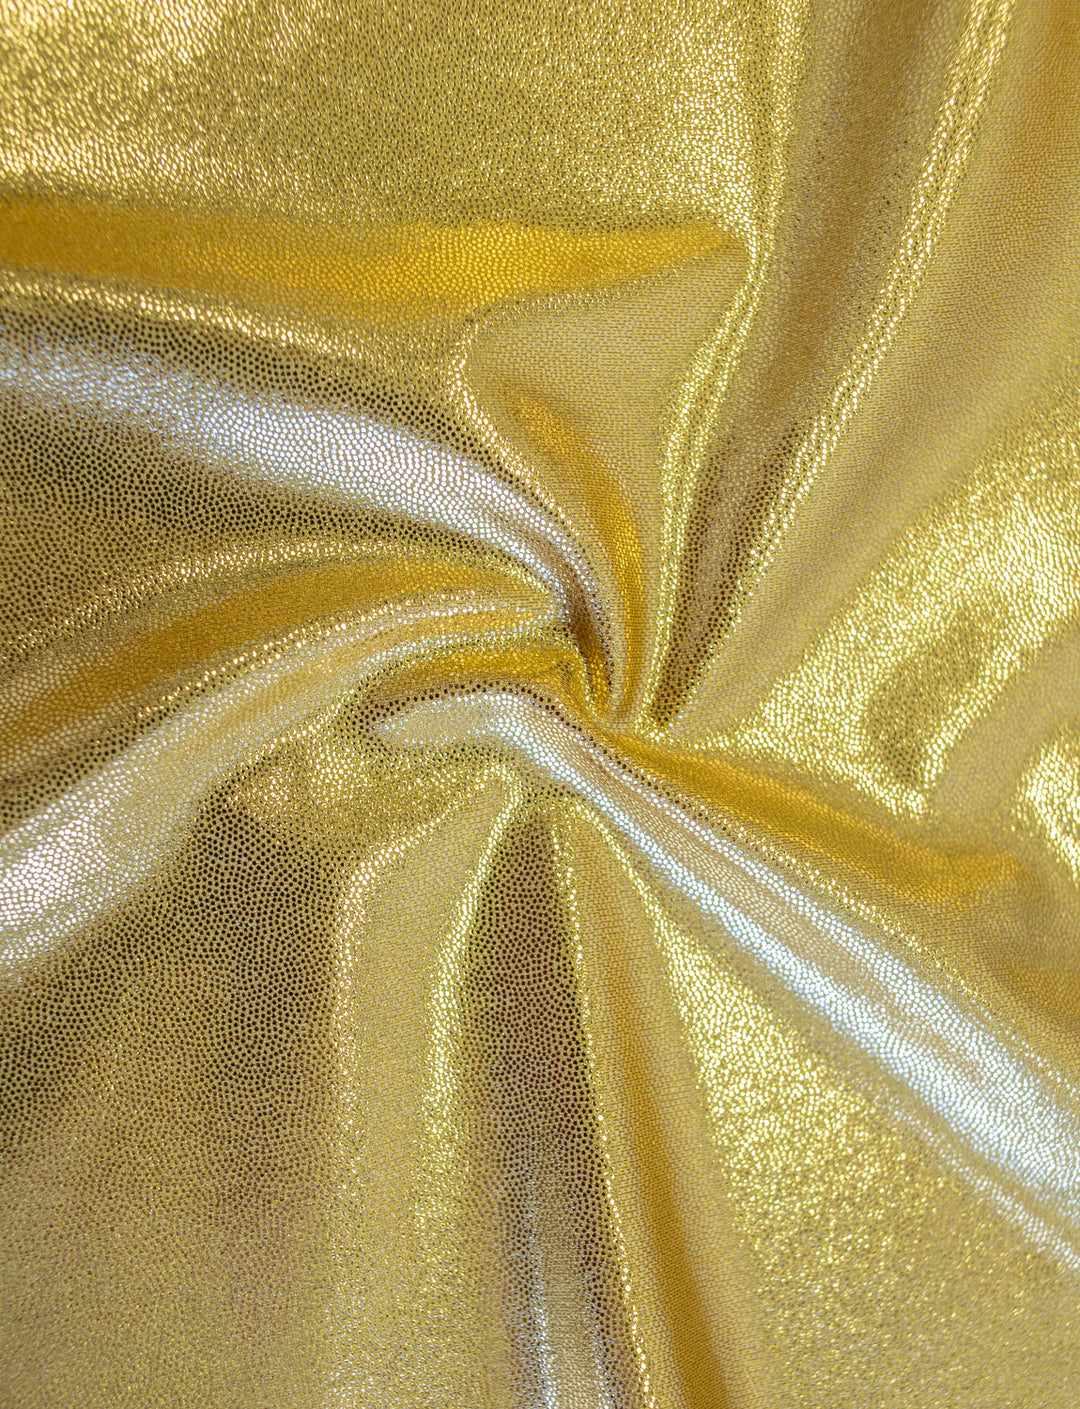 Light gold 4 way stretch spandex fabric